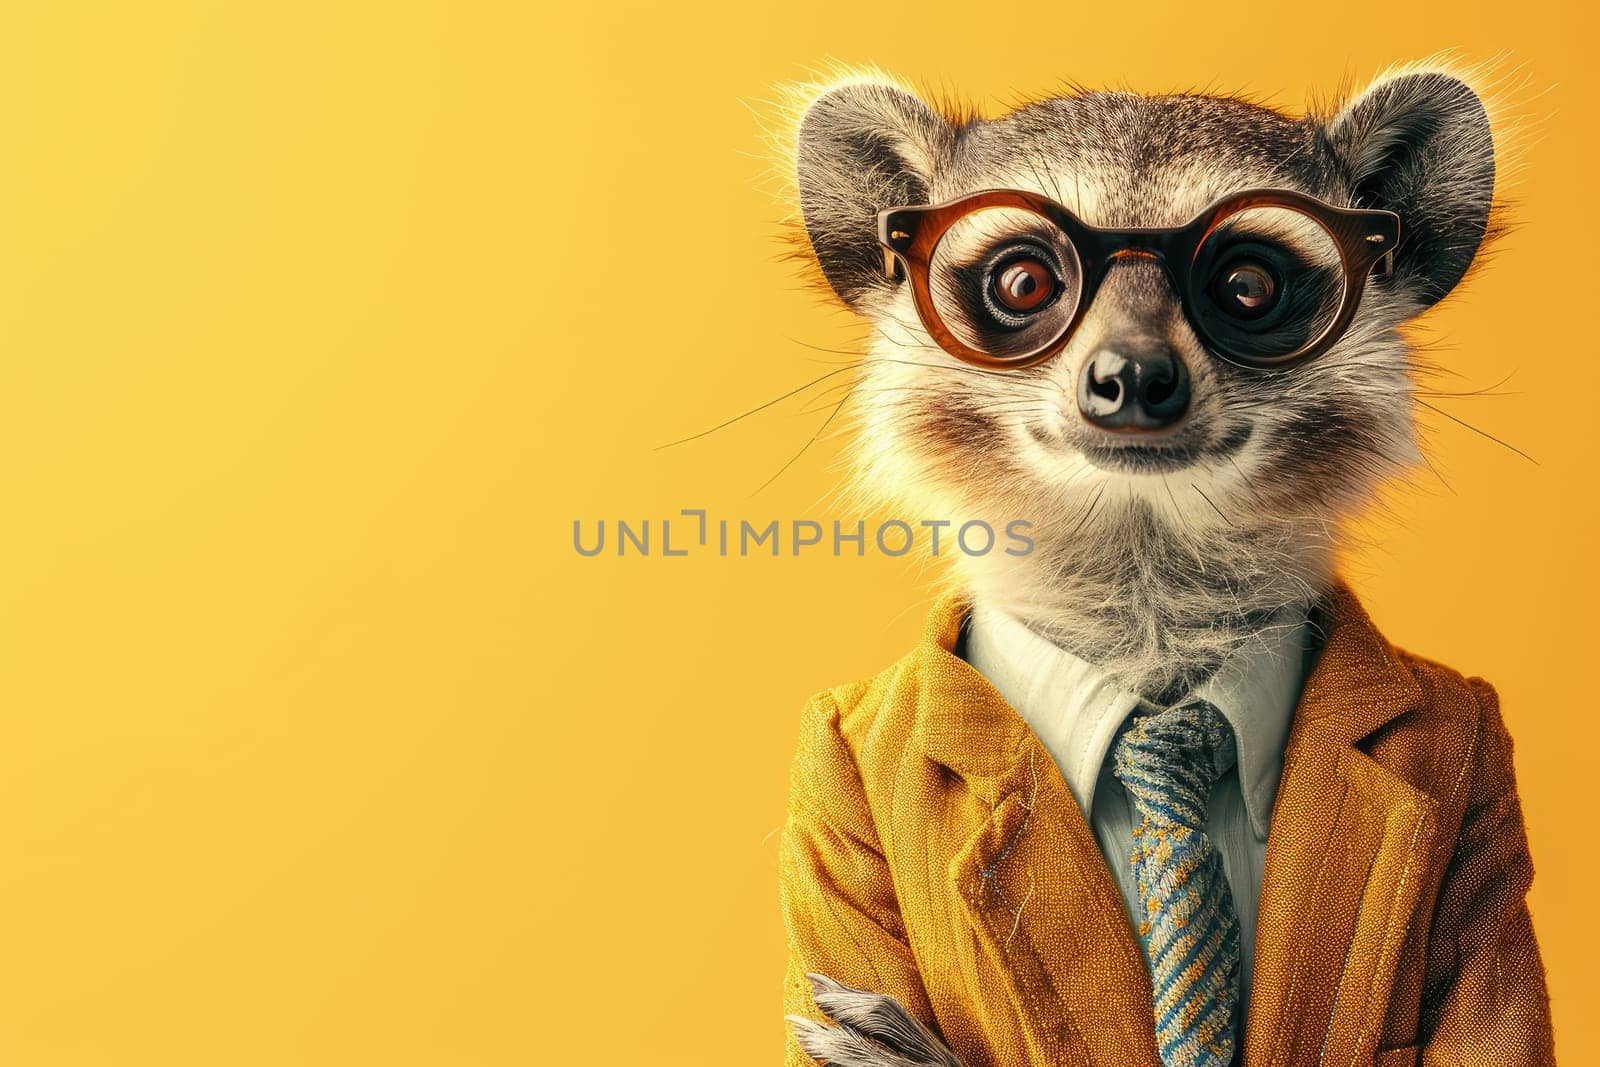 Stylish portrait of dressed up anthropomorphic animal themes, Funny pop art illustration.